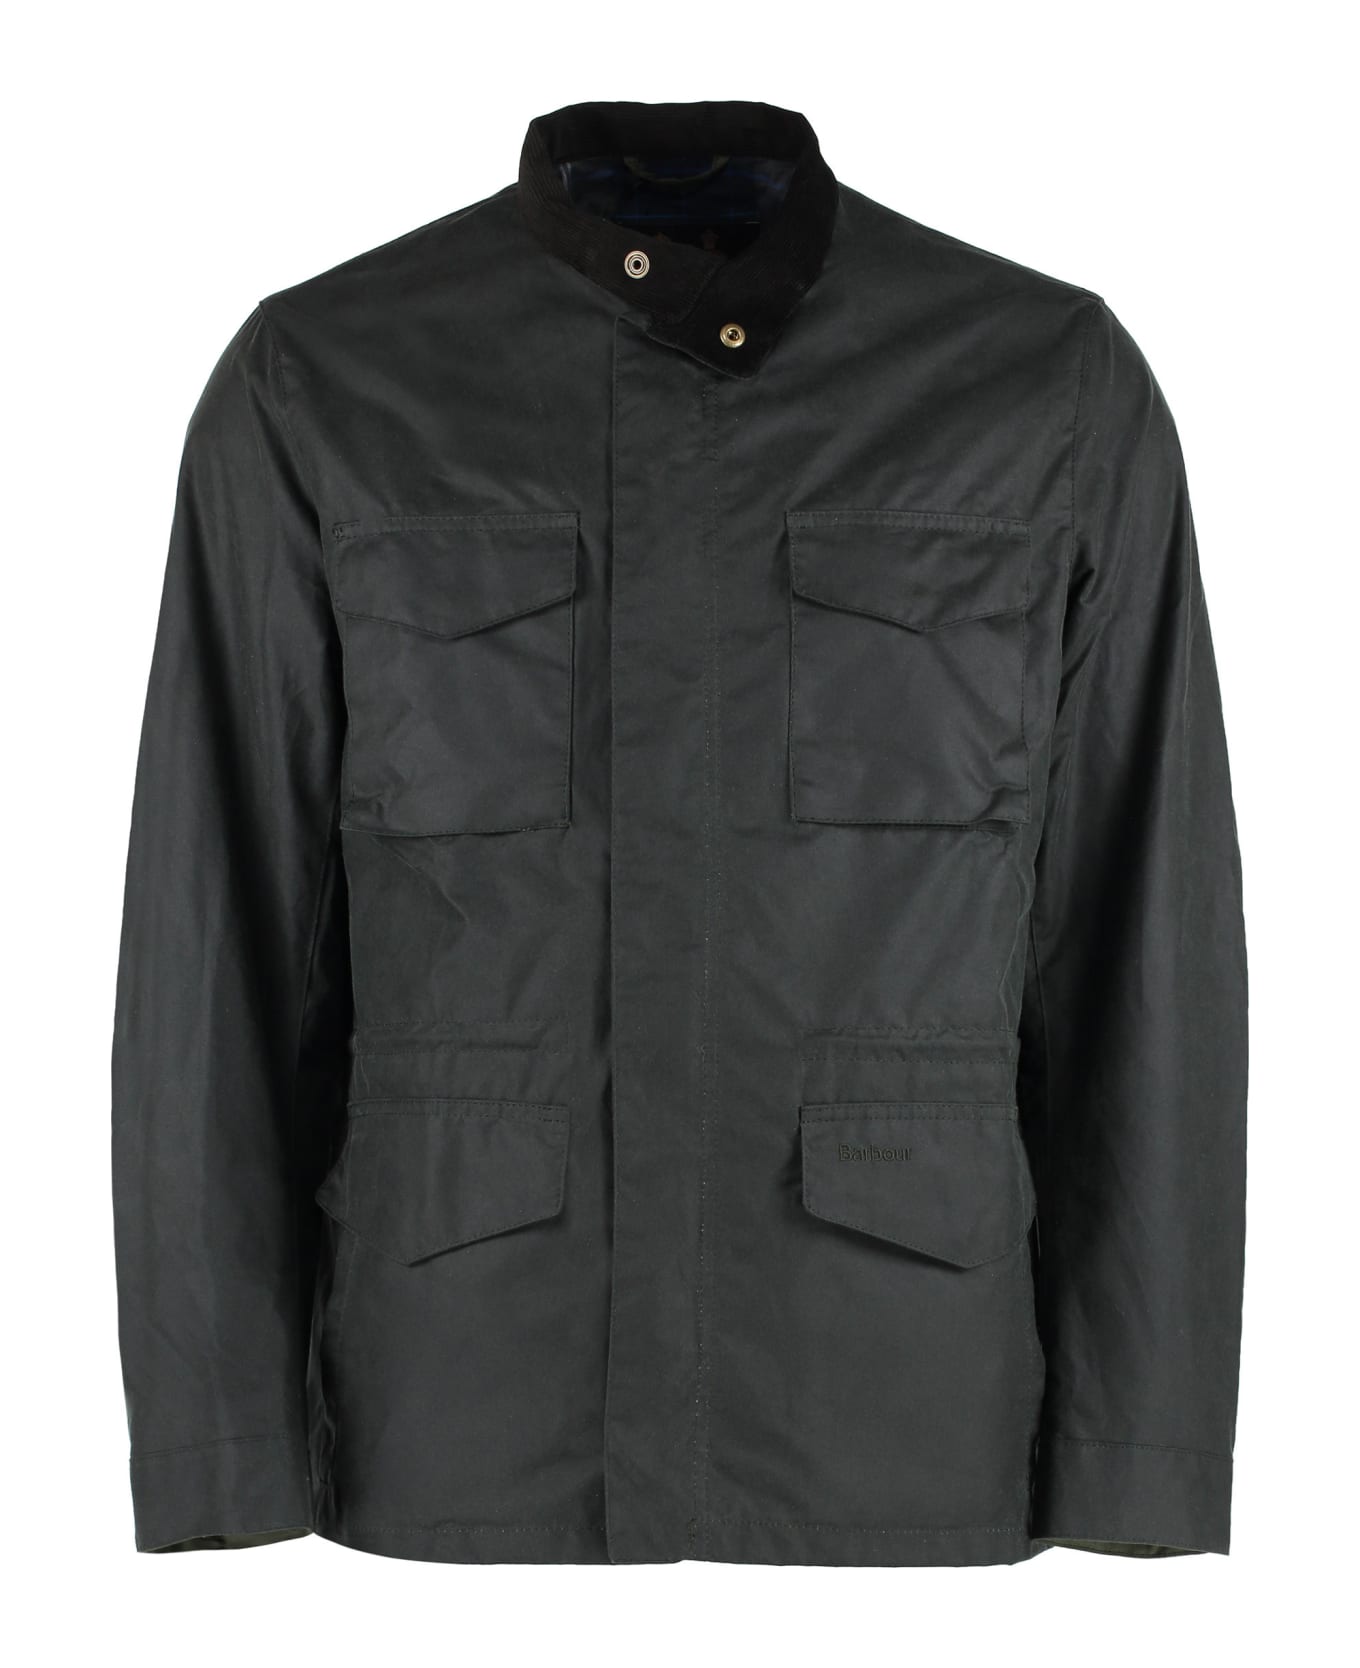 Barbour Farnham Jacket In Waxed Cotton - green